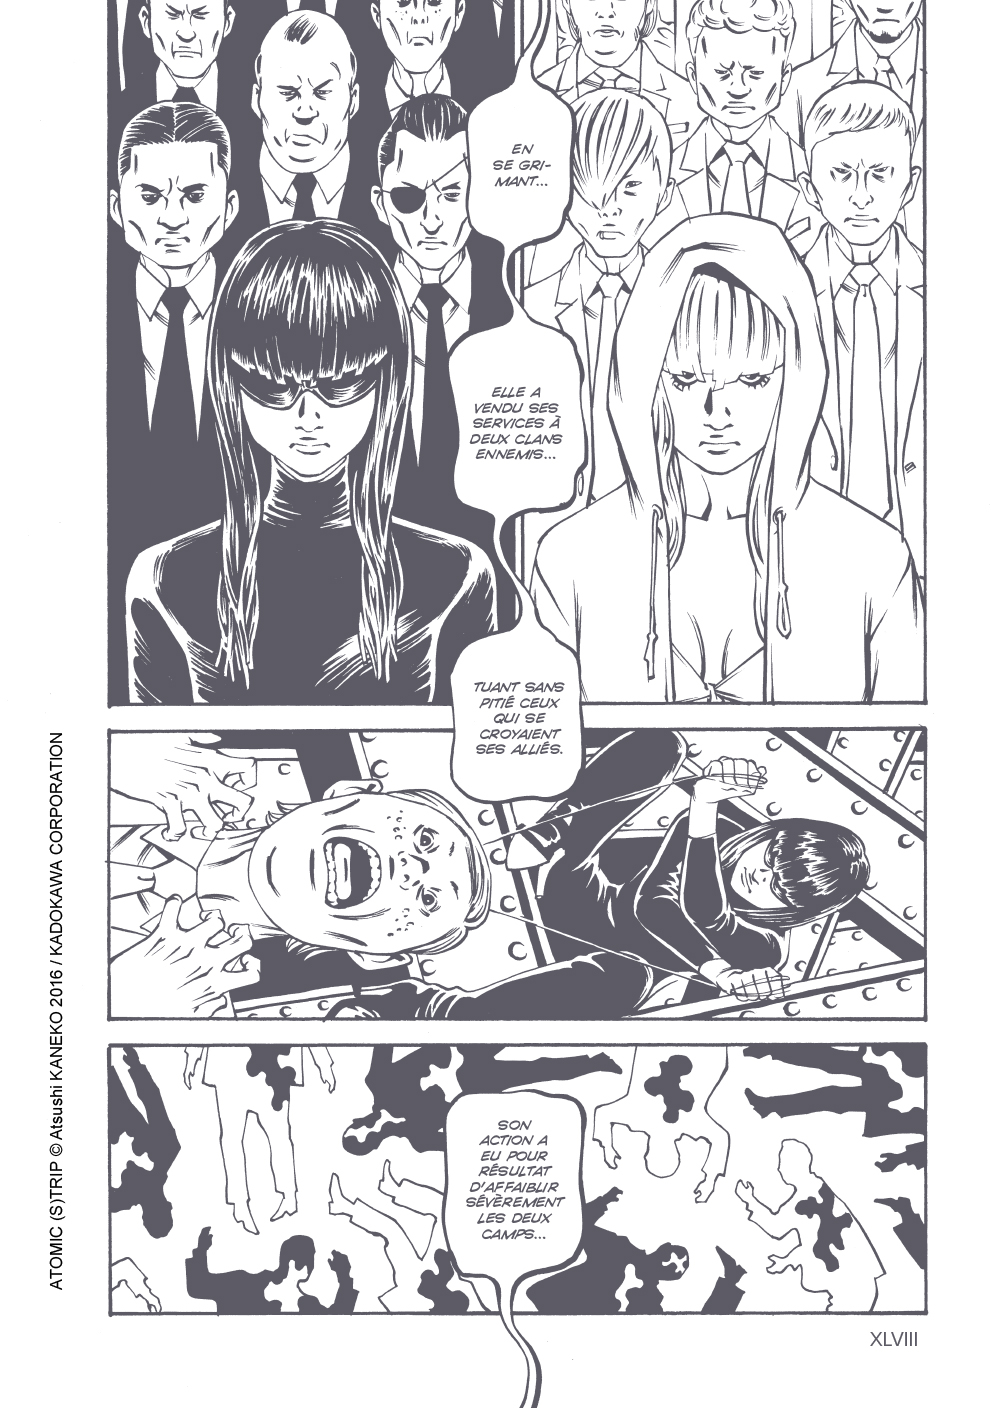 Extrait n°1 du manga Atomic (S)trip par Kaneko Atsushi